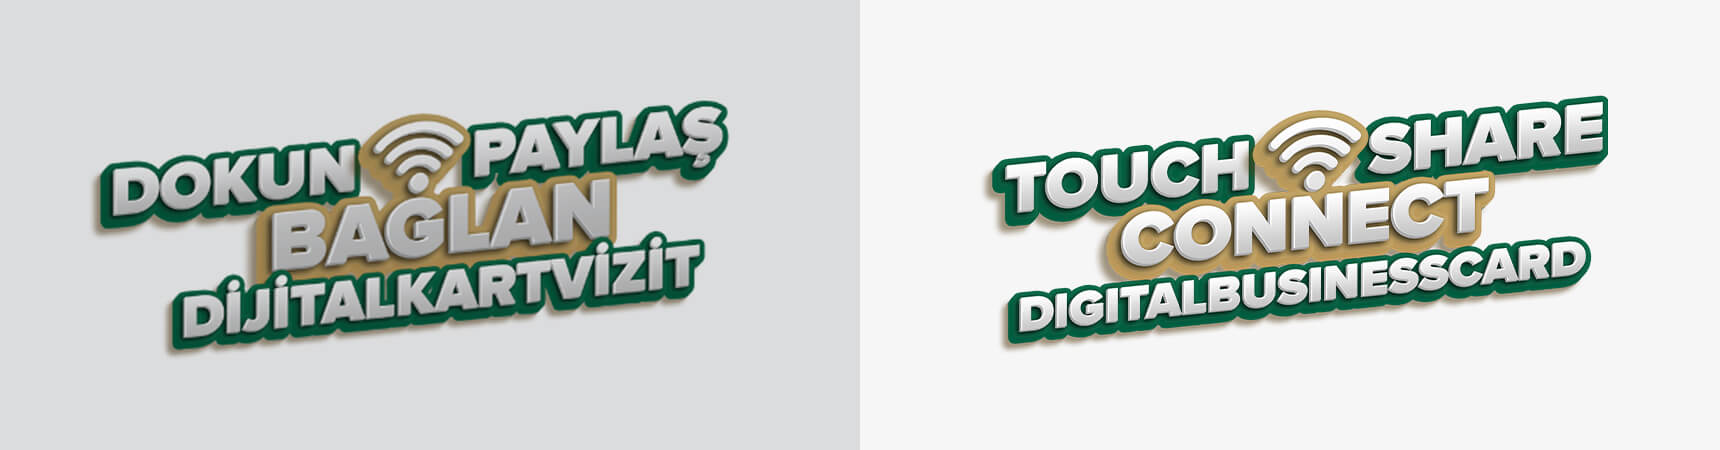 Trowas-2 - Türkiye’nin lider dijital kartvizit platformu TROWAS-5- logo part-6 - mini kurumsal-7 - mini logos-8 - slogan